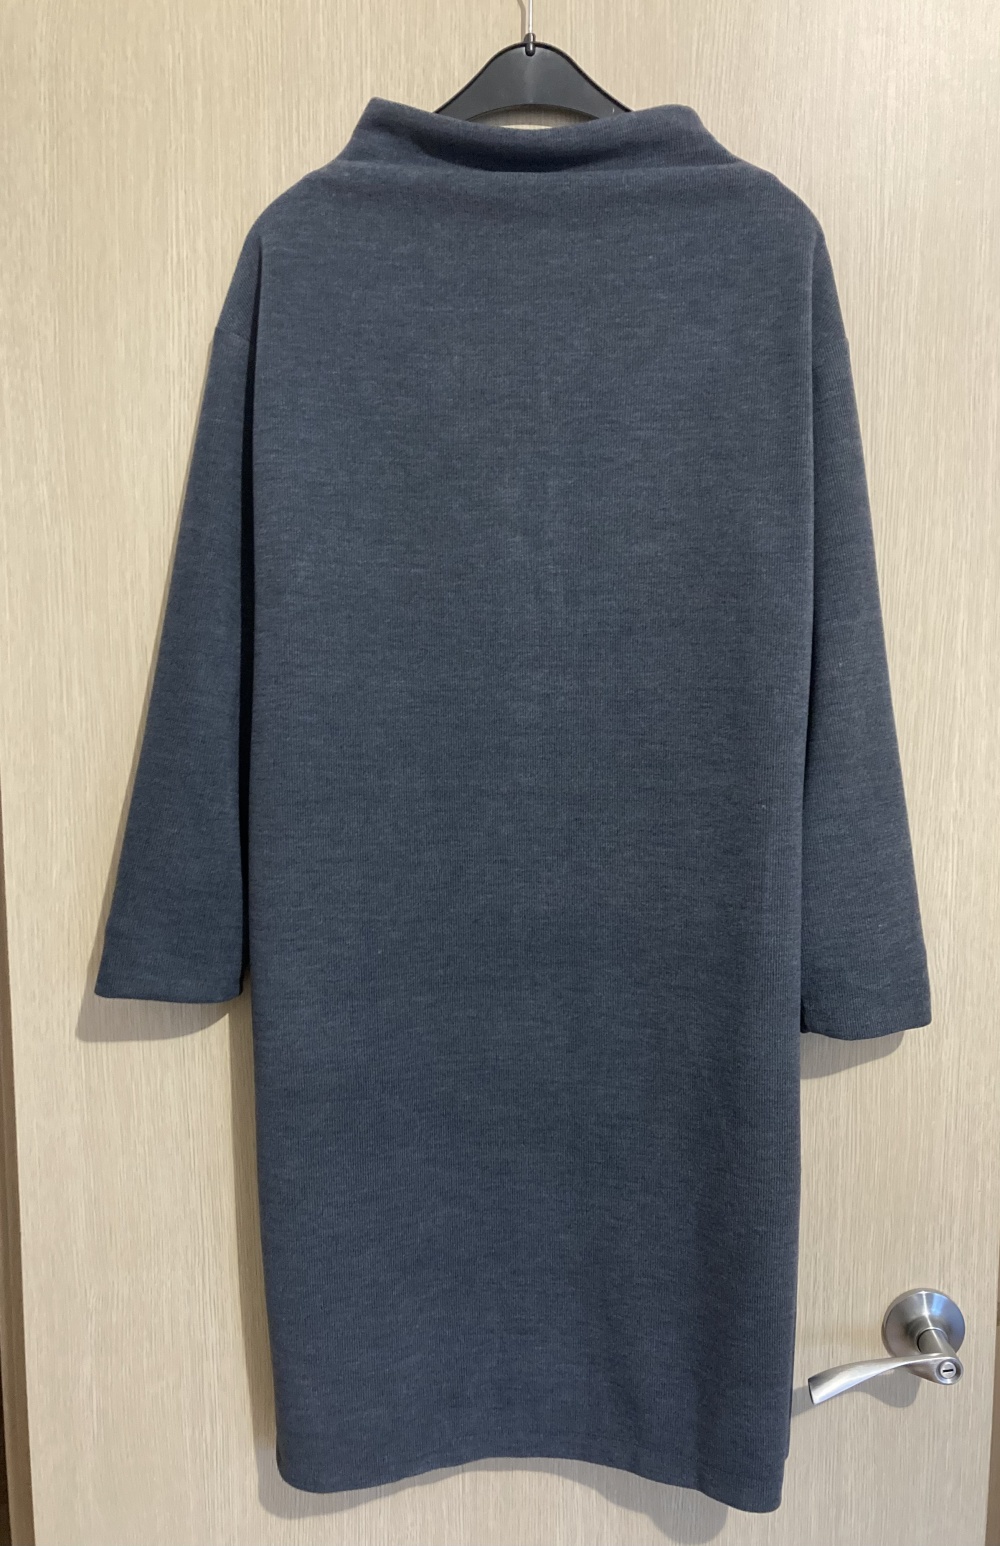 Платье “Mironi ”, L-XL размер